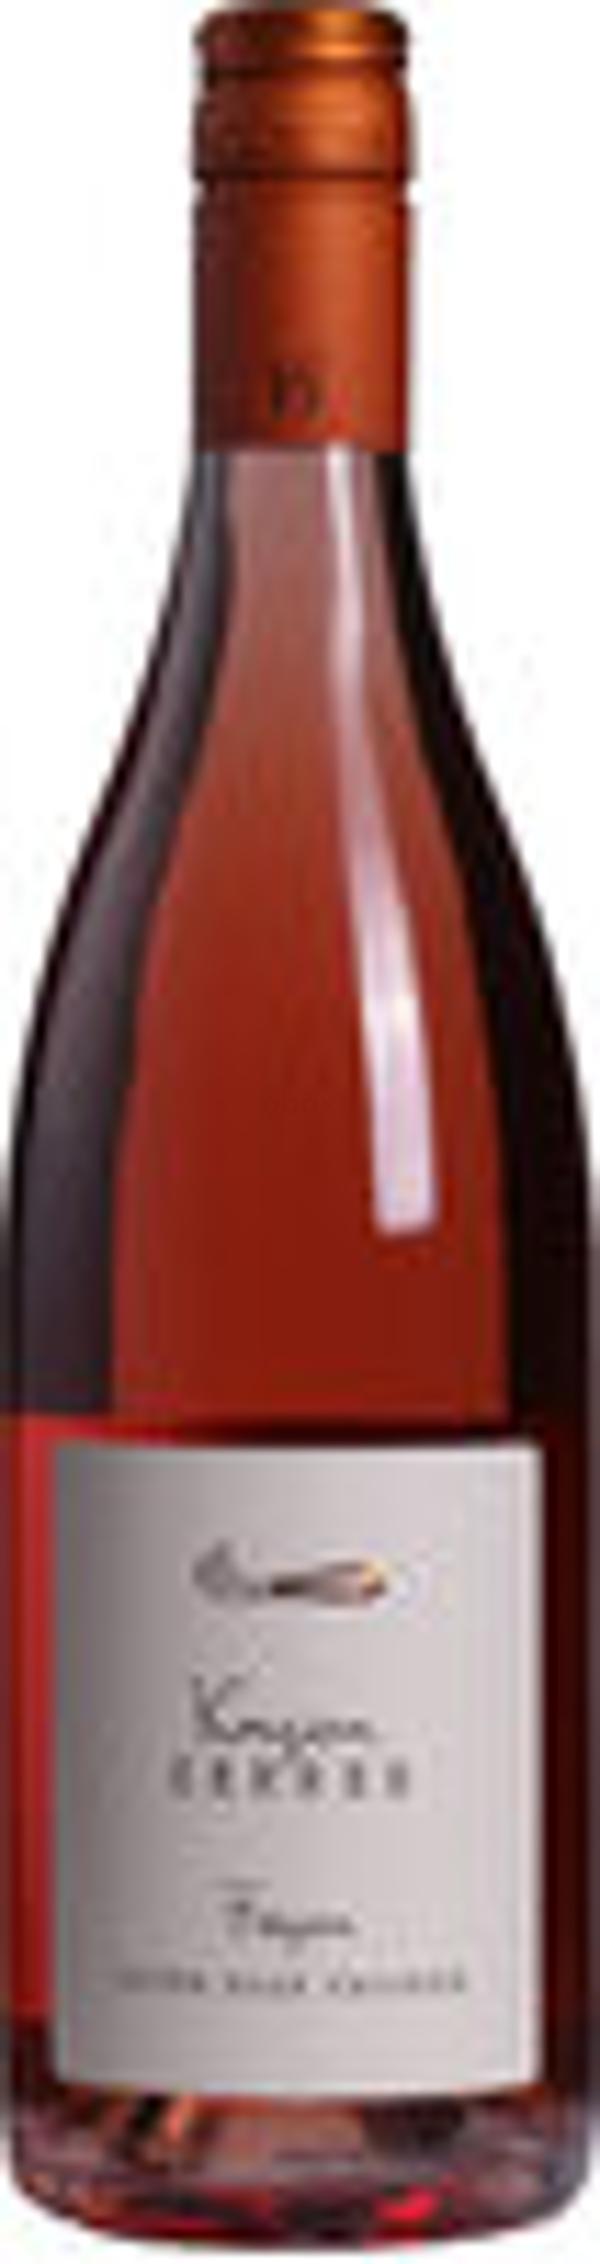 Produktfoto zu Facon Cuvee rosé 0,75L